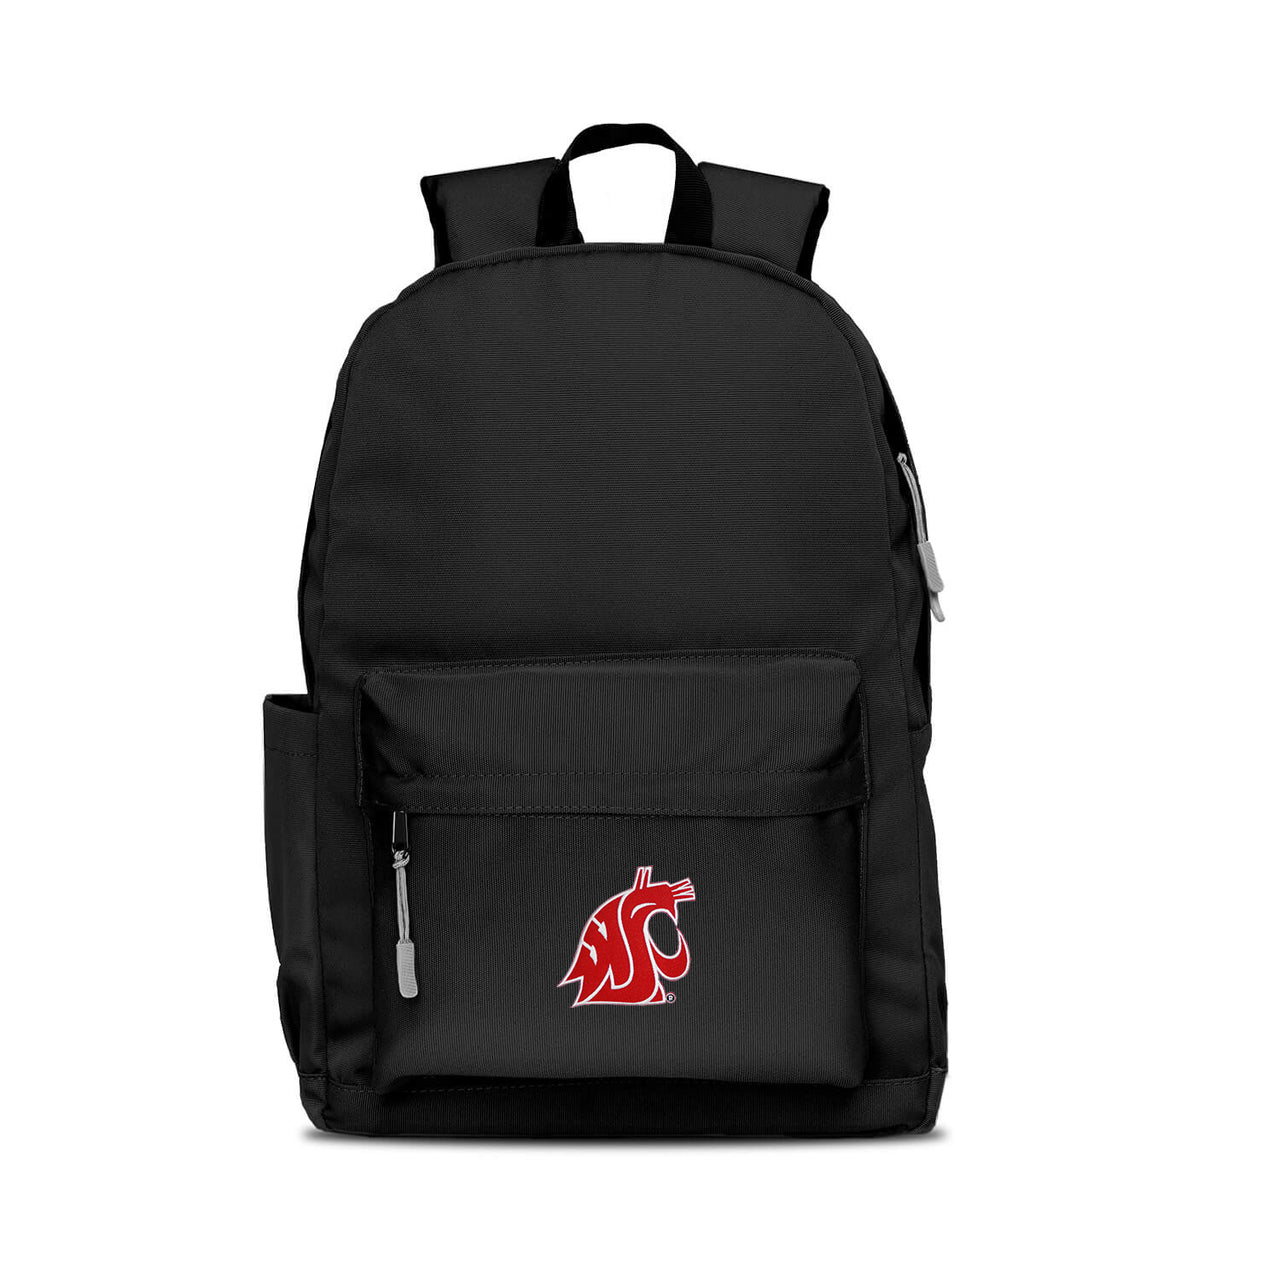 Washington State Cougars Campus Laptop Backpack- Black